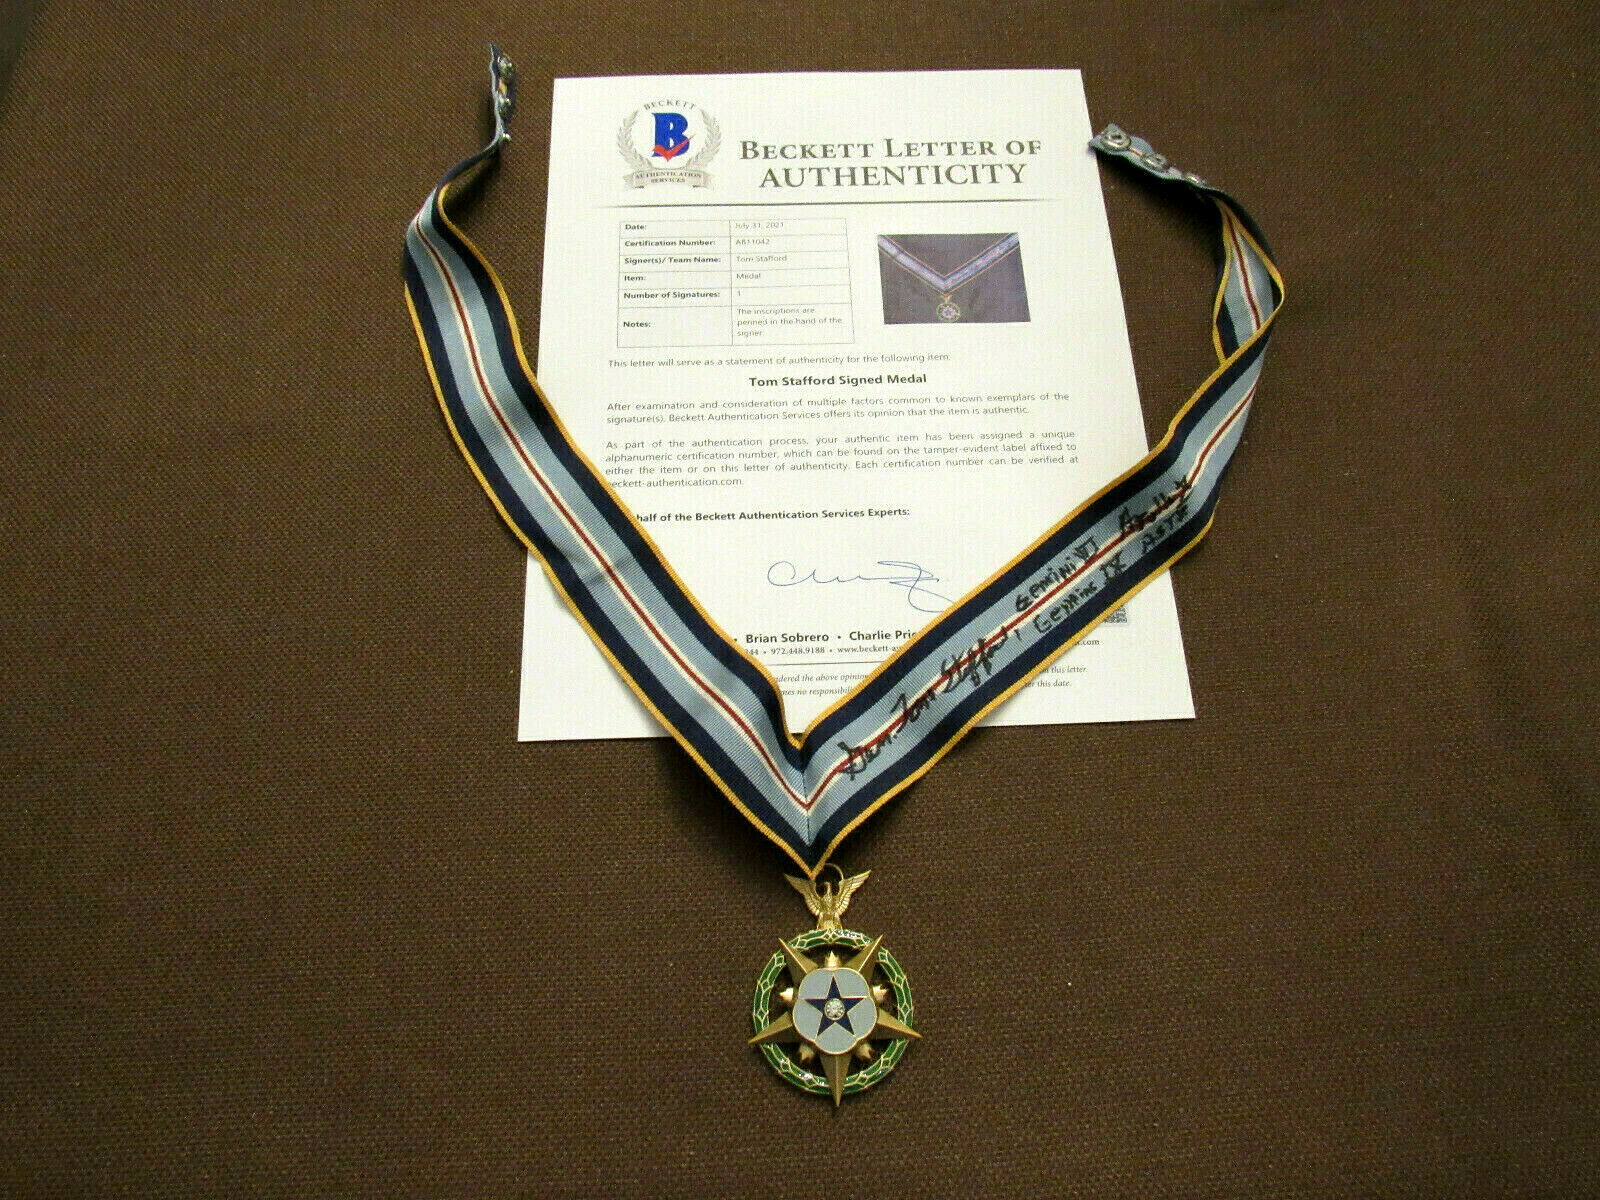 Thomas Tom Stafford Apollo Gemini Signed Auto U.s. Space Medal Of Honor Beckett